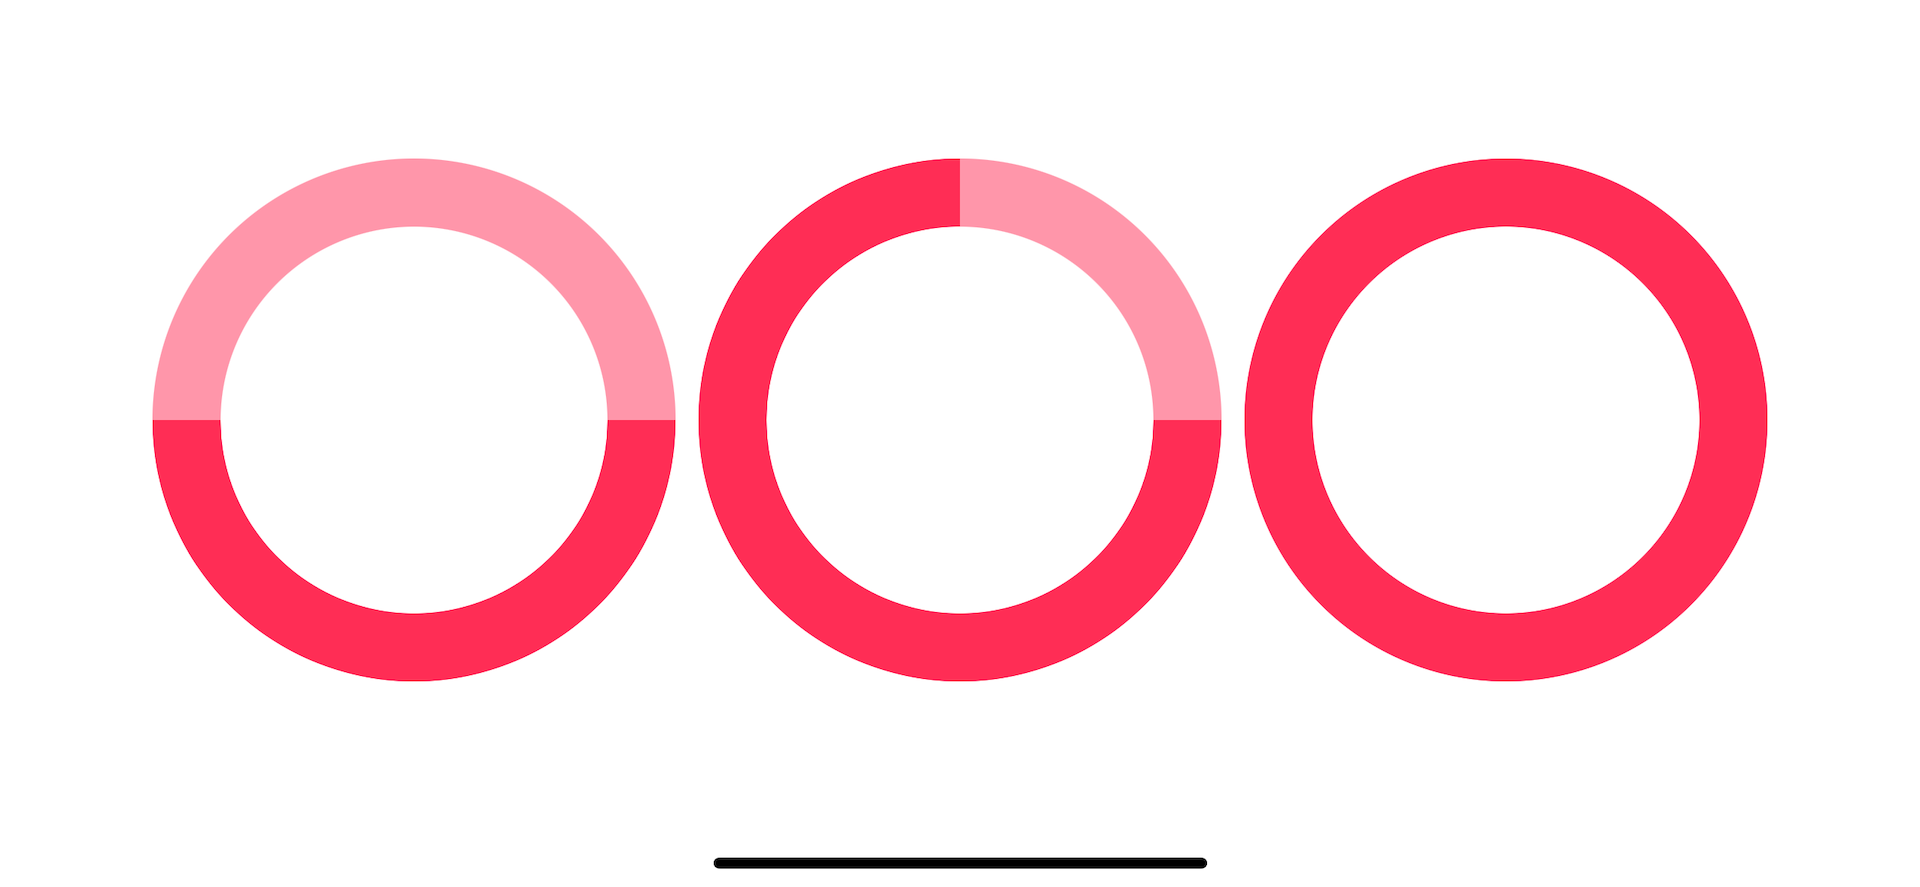 Circular progress bars with 50%, 75%, and 100% progress.